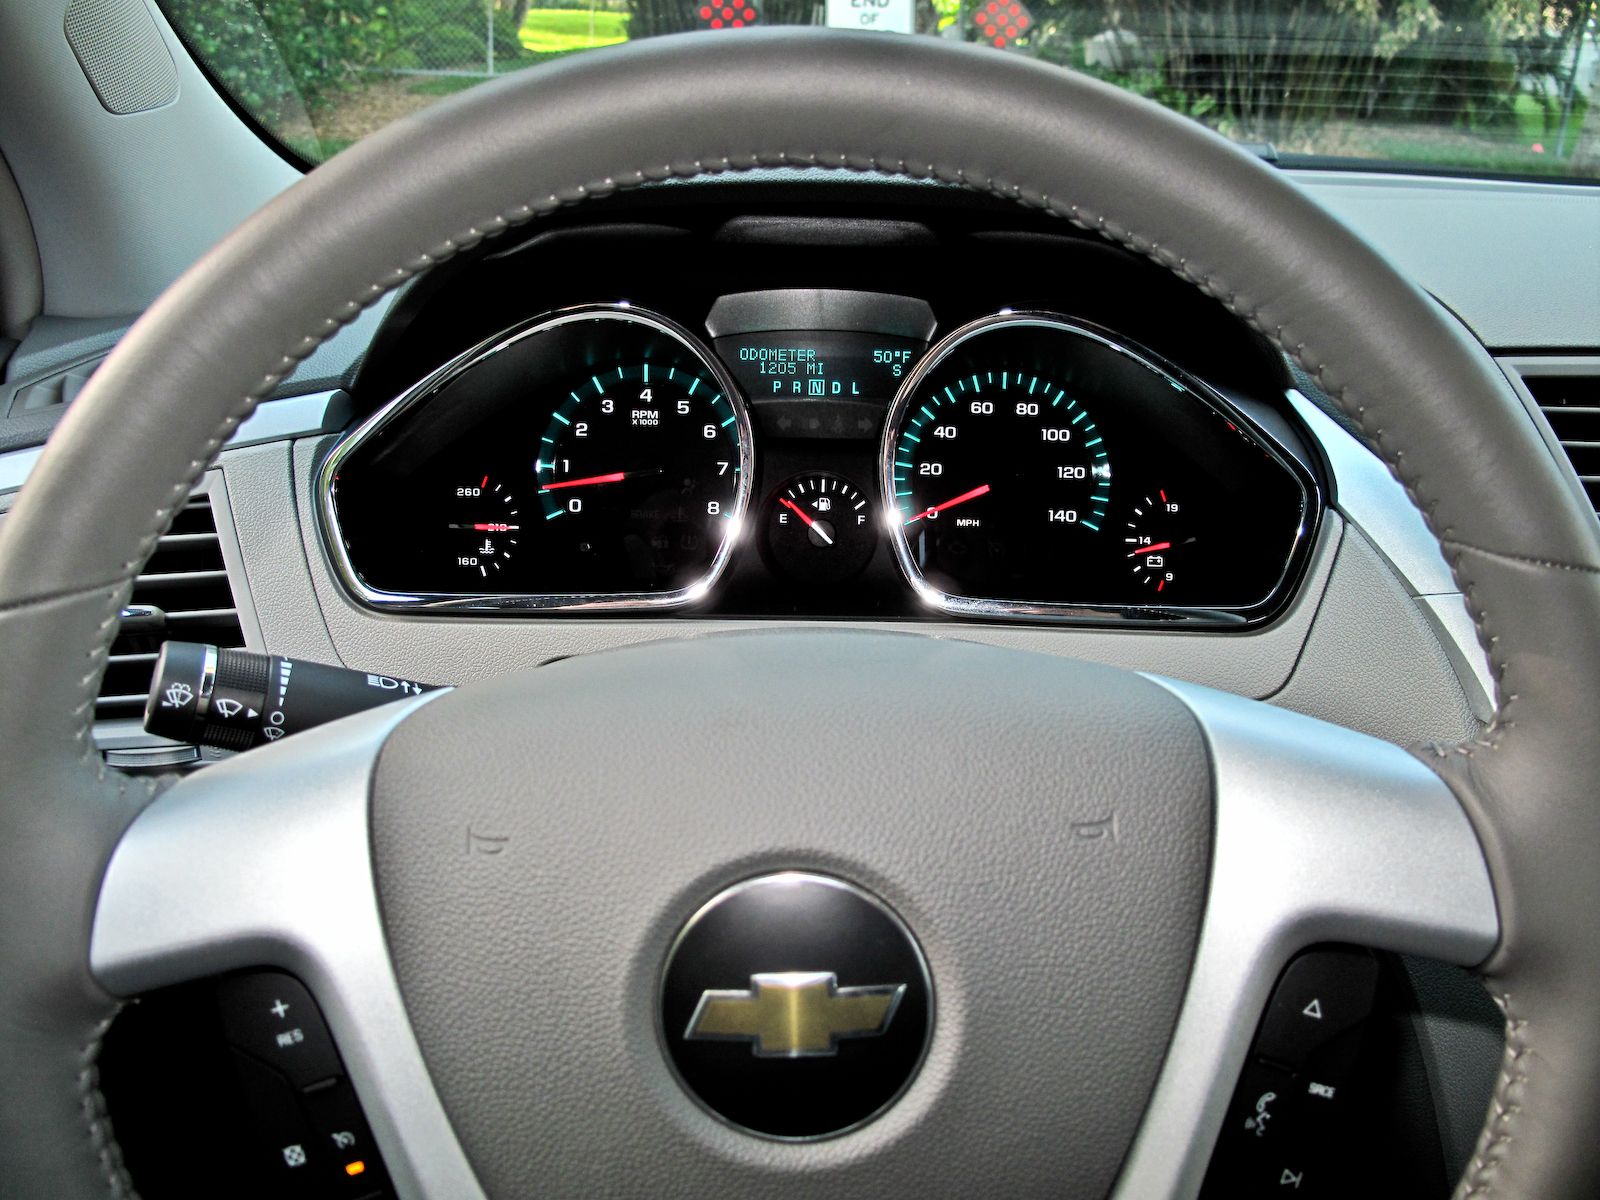 2009 Chevrolet Traverse